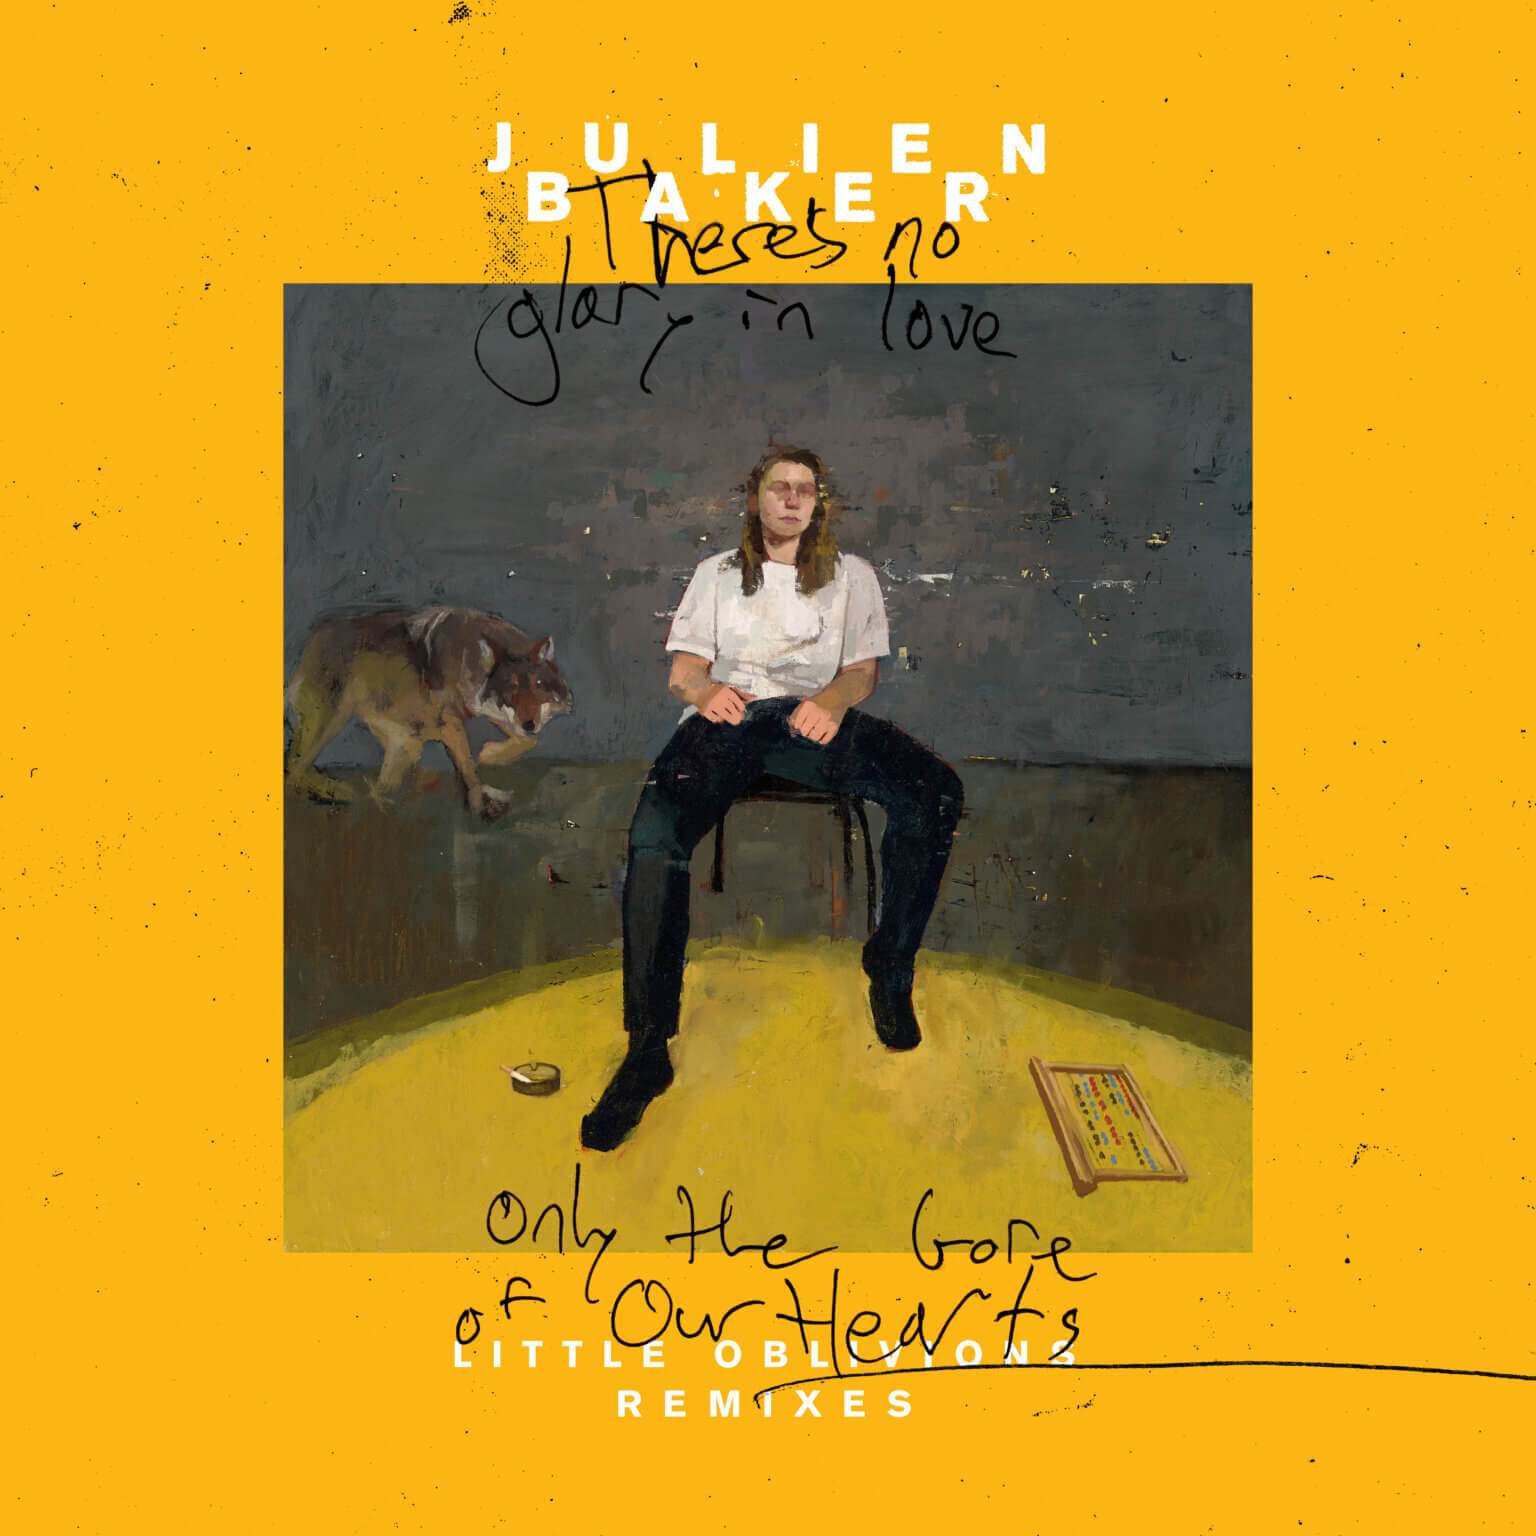 Julien Baker Announces 'Little Oblivion Remixes' Out September 1 via Matador Records